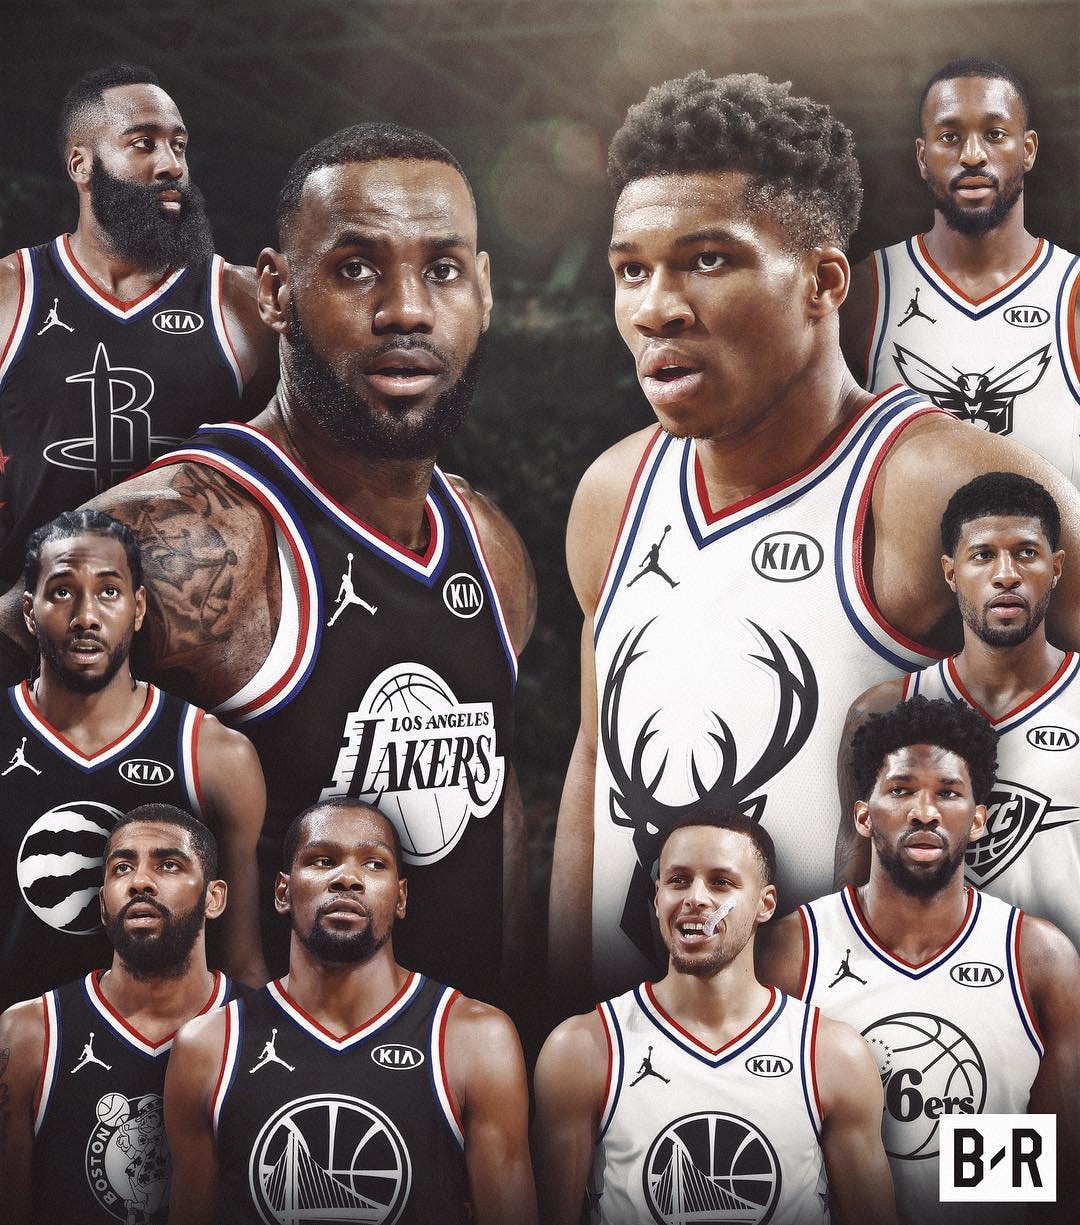 NBA 2019 全明星賽 Team LeBron 及 Team Giannis 隊長選人過程完整公開